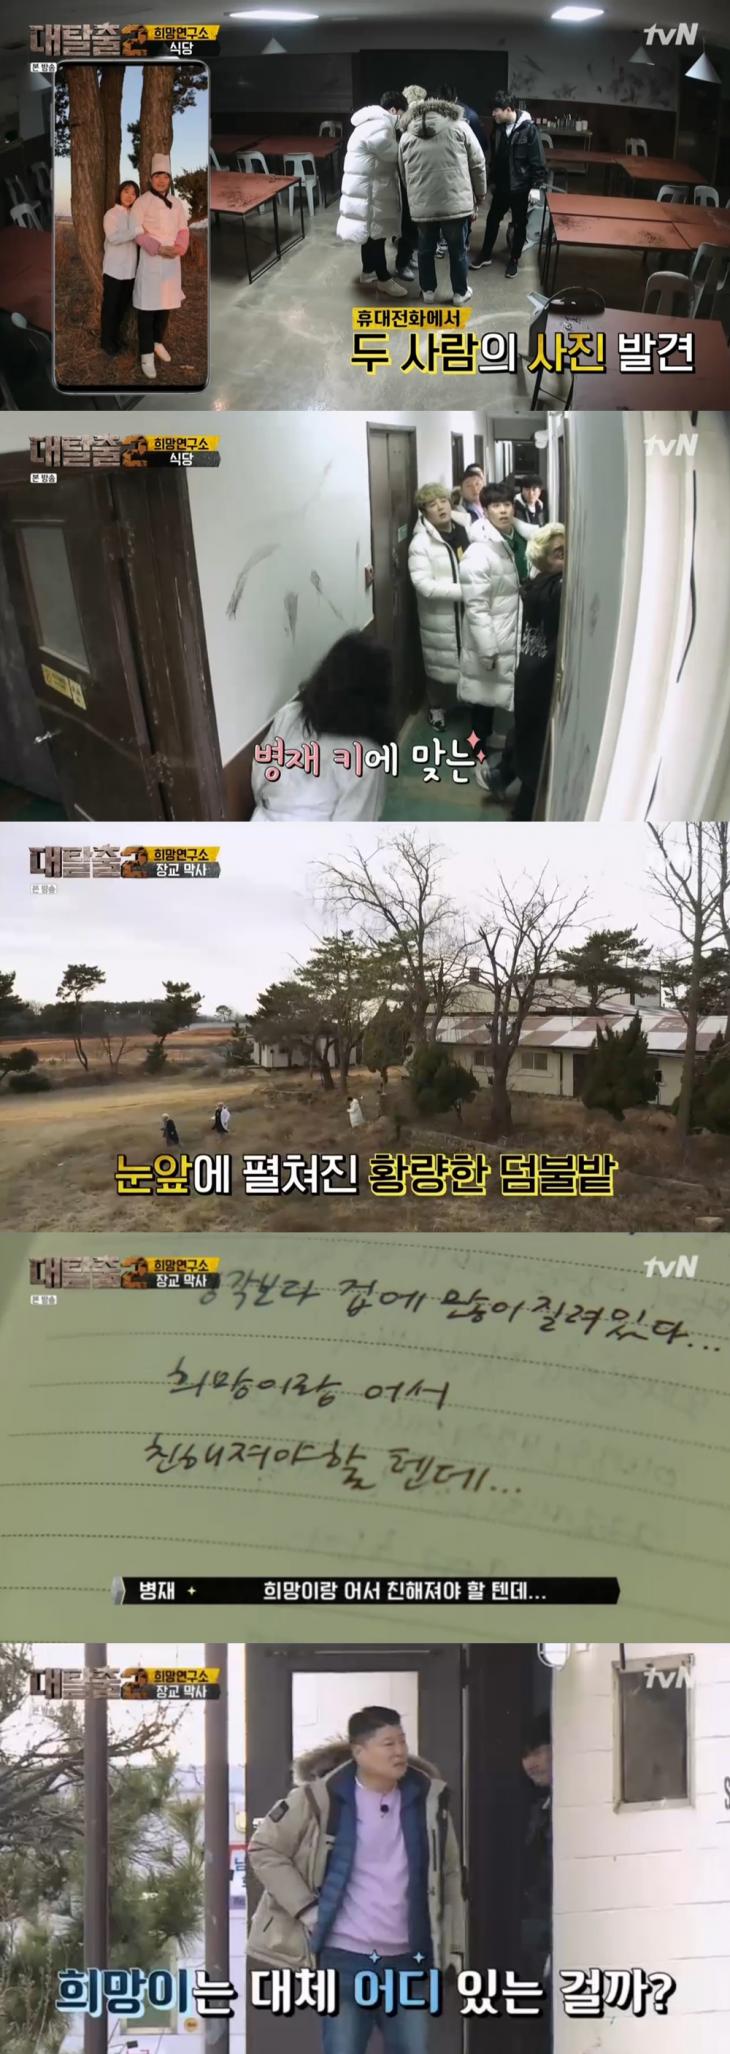 tvN '대탈출2' 방송 캡쳐